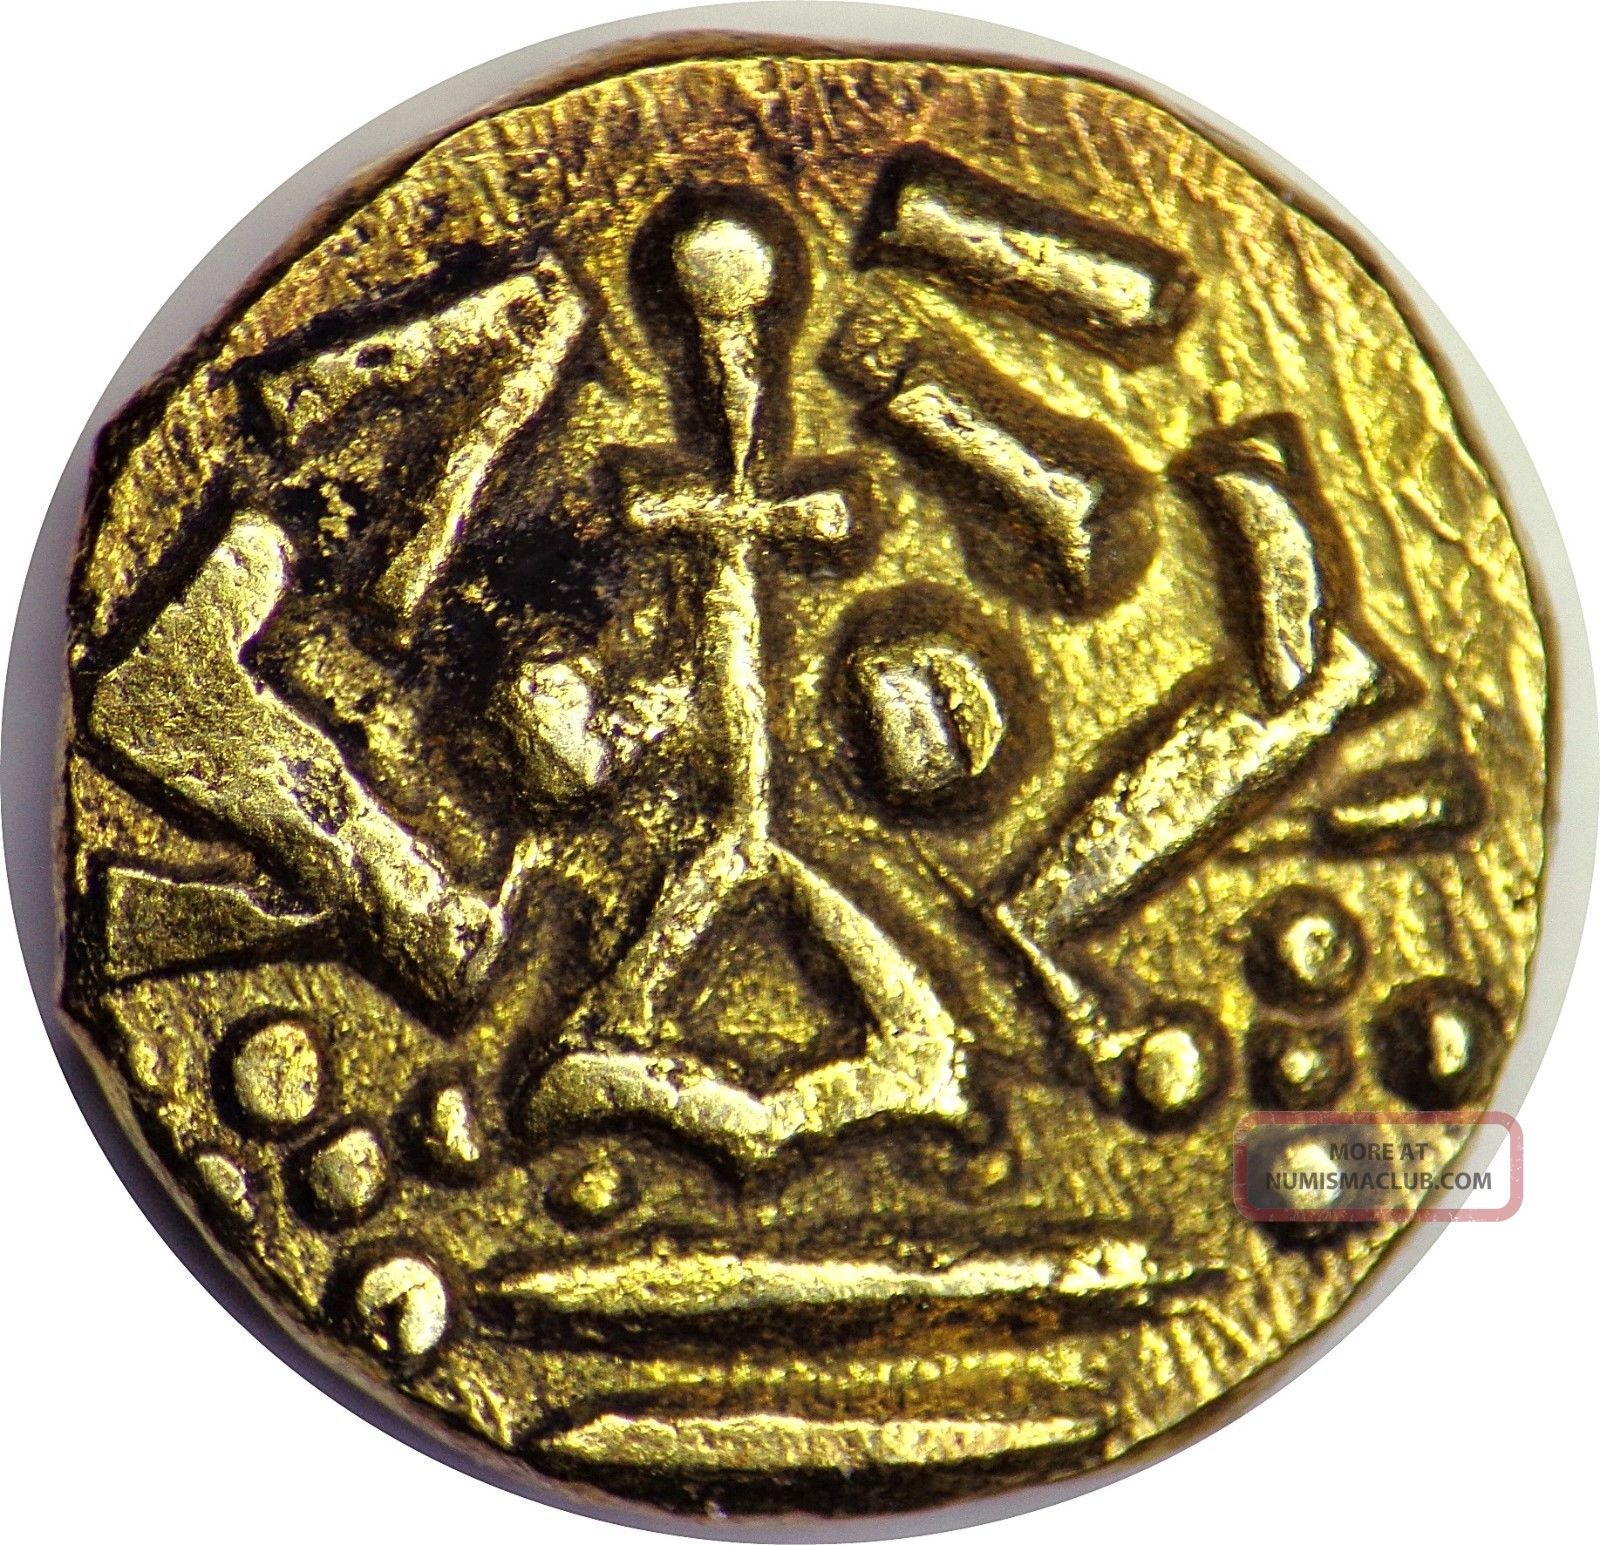 Ancient gold coins - realtimebasta